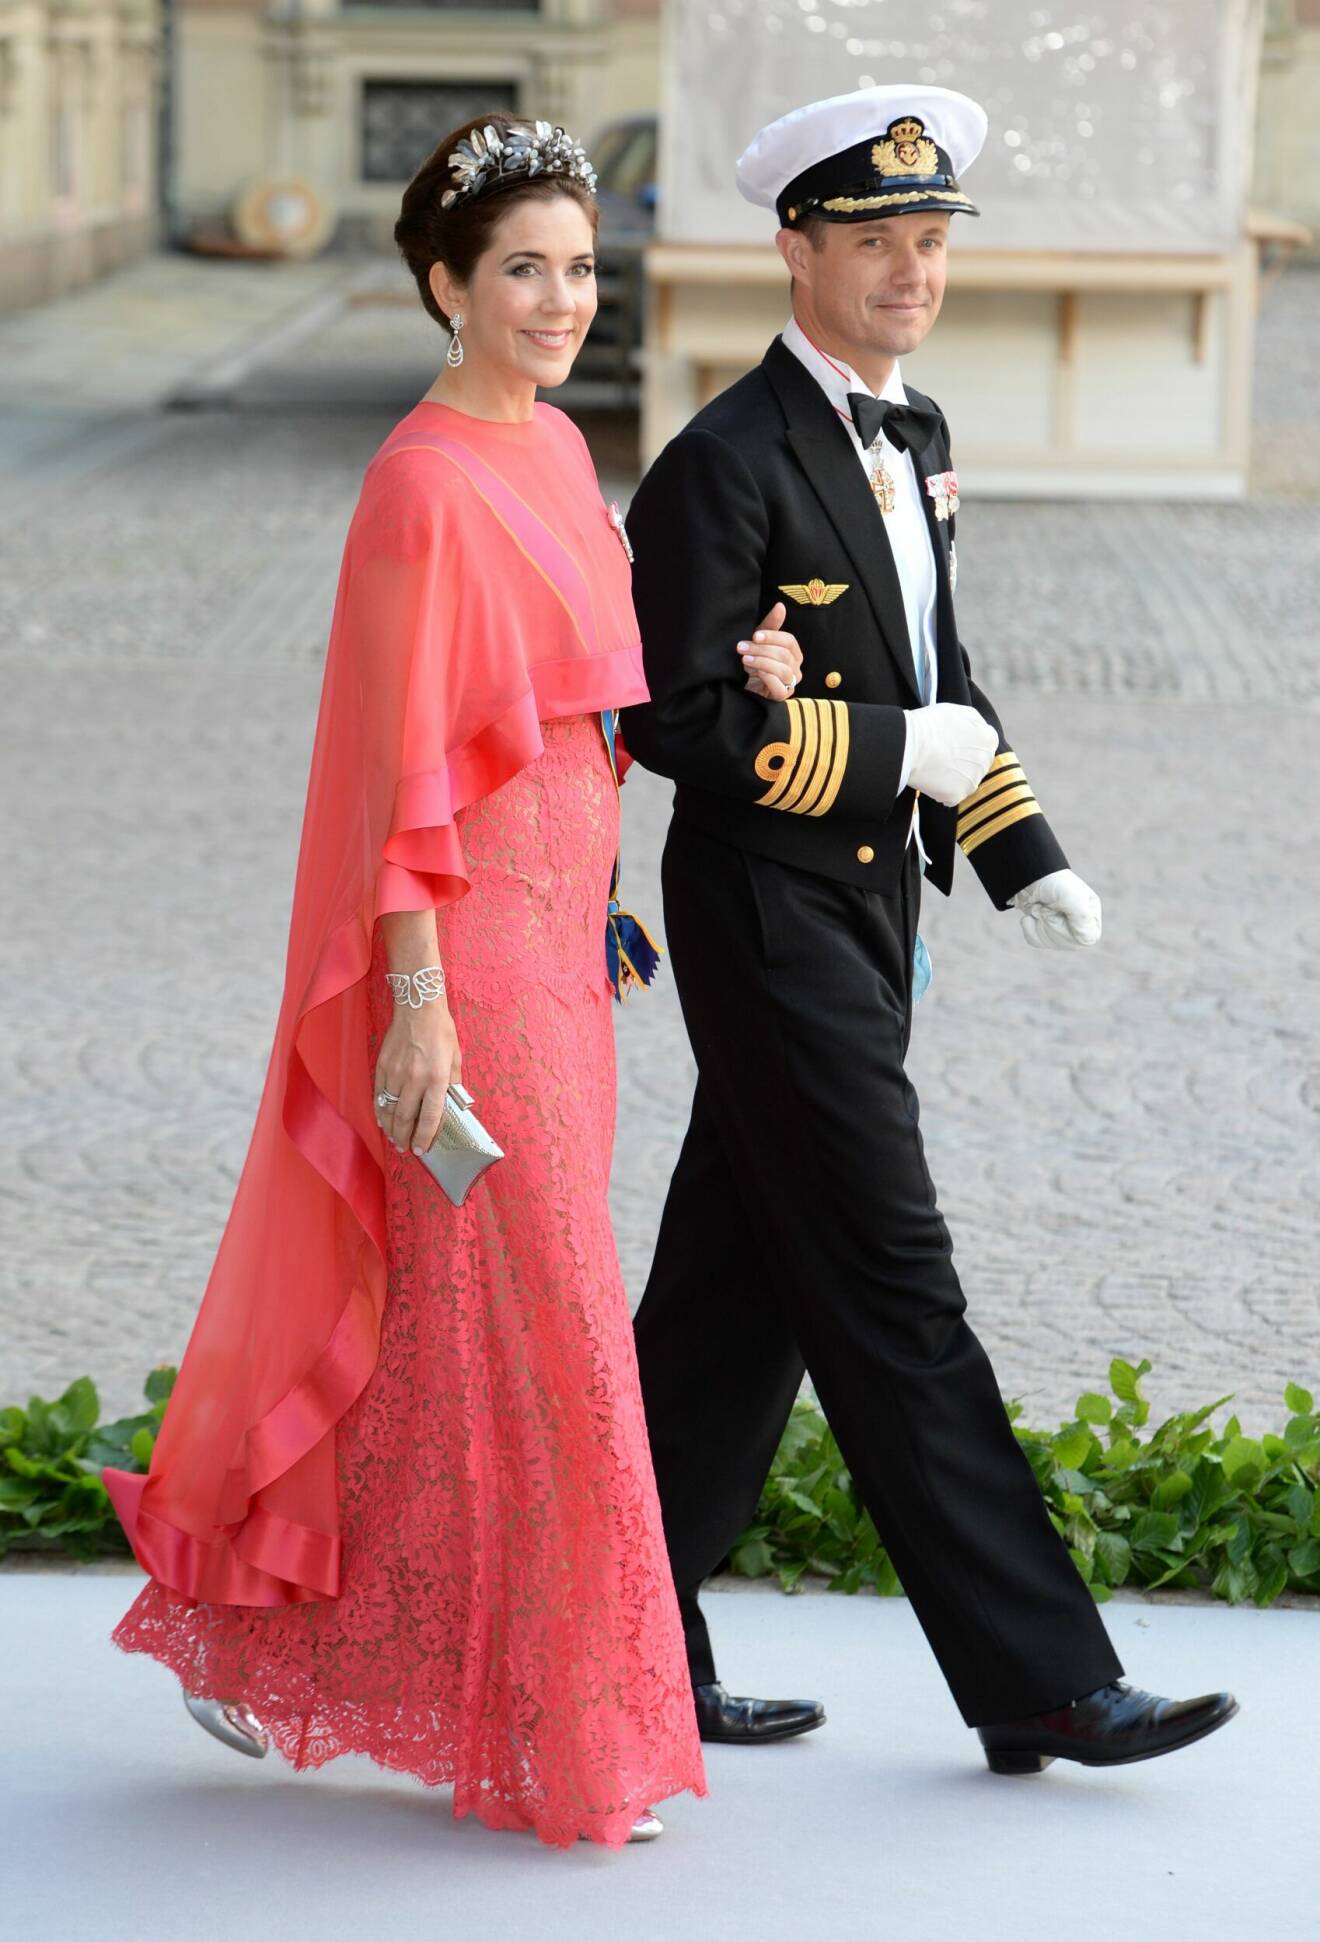 Kronprinsessan Mary och kronprins Frederik vid prinsessan Madeleines bröllop 2013.